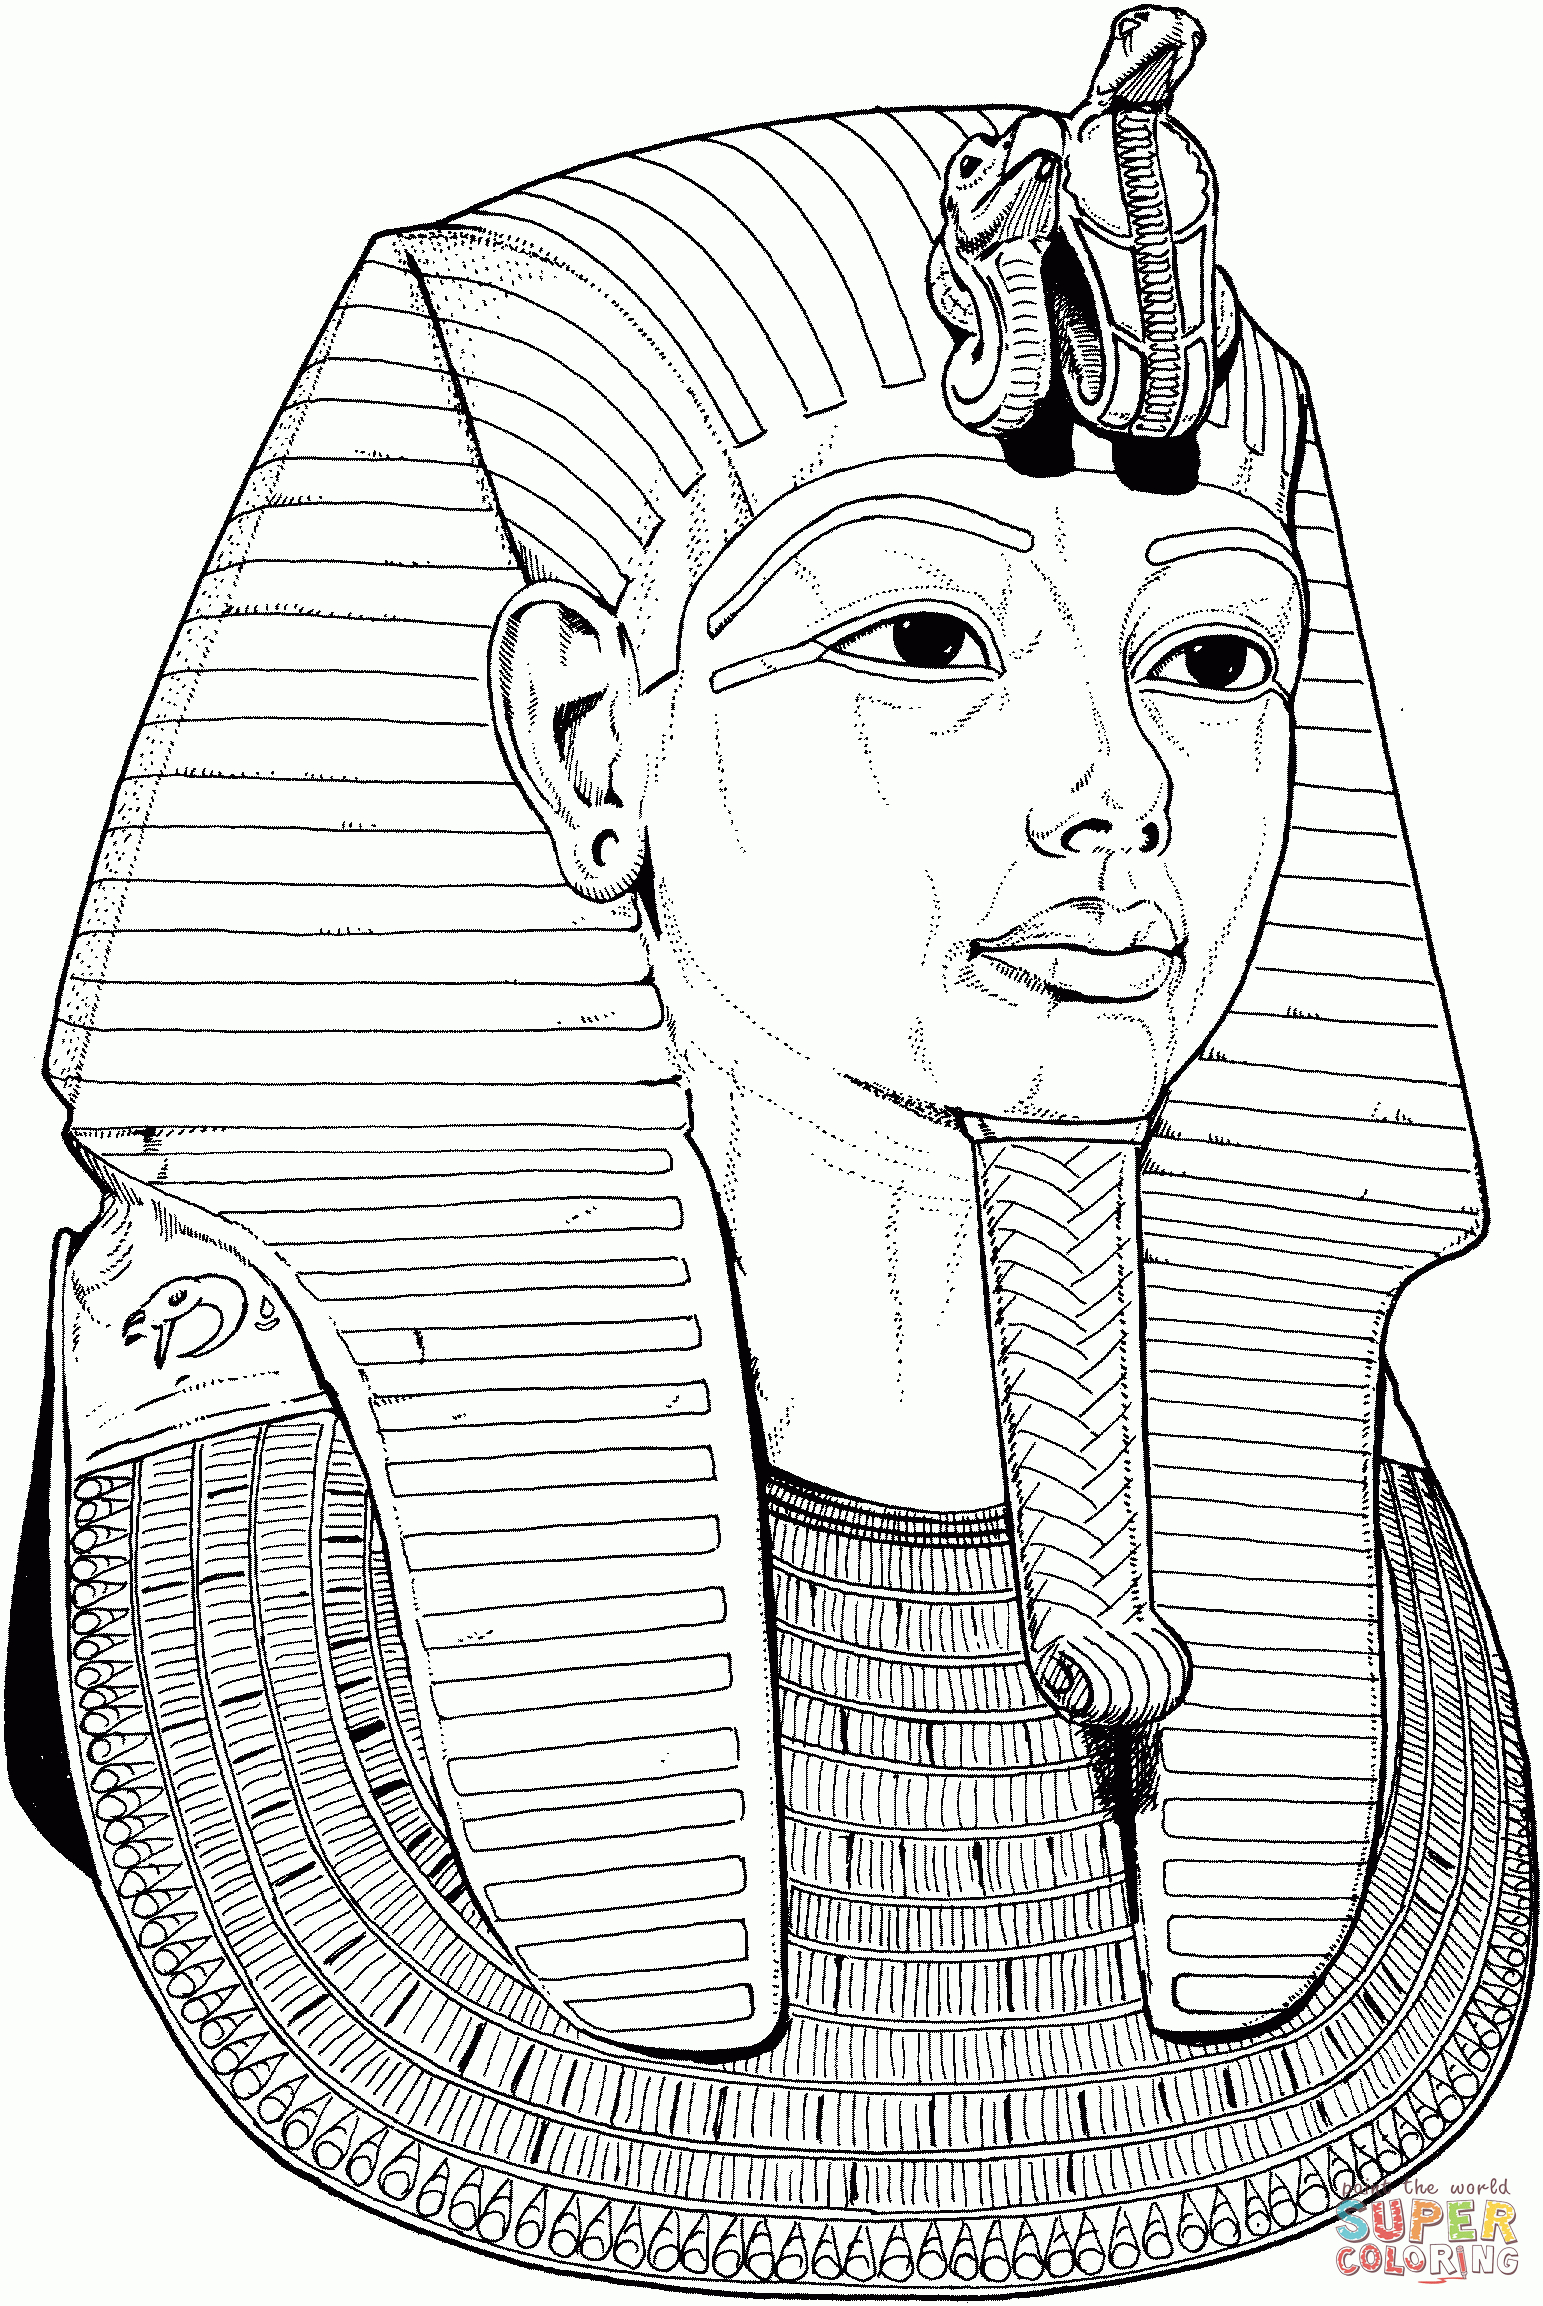 Tutankhamun Death Mask Coloring Page | Free Printable Coloring Pages - Free Printable Egyptian Masks